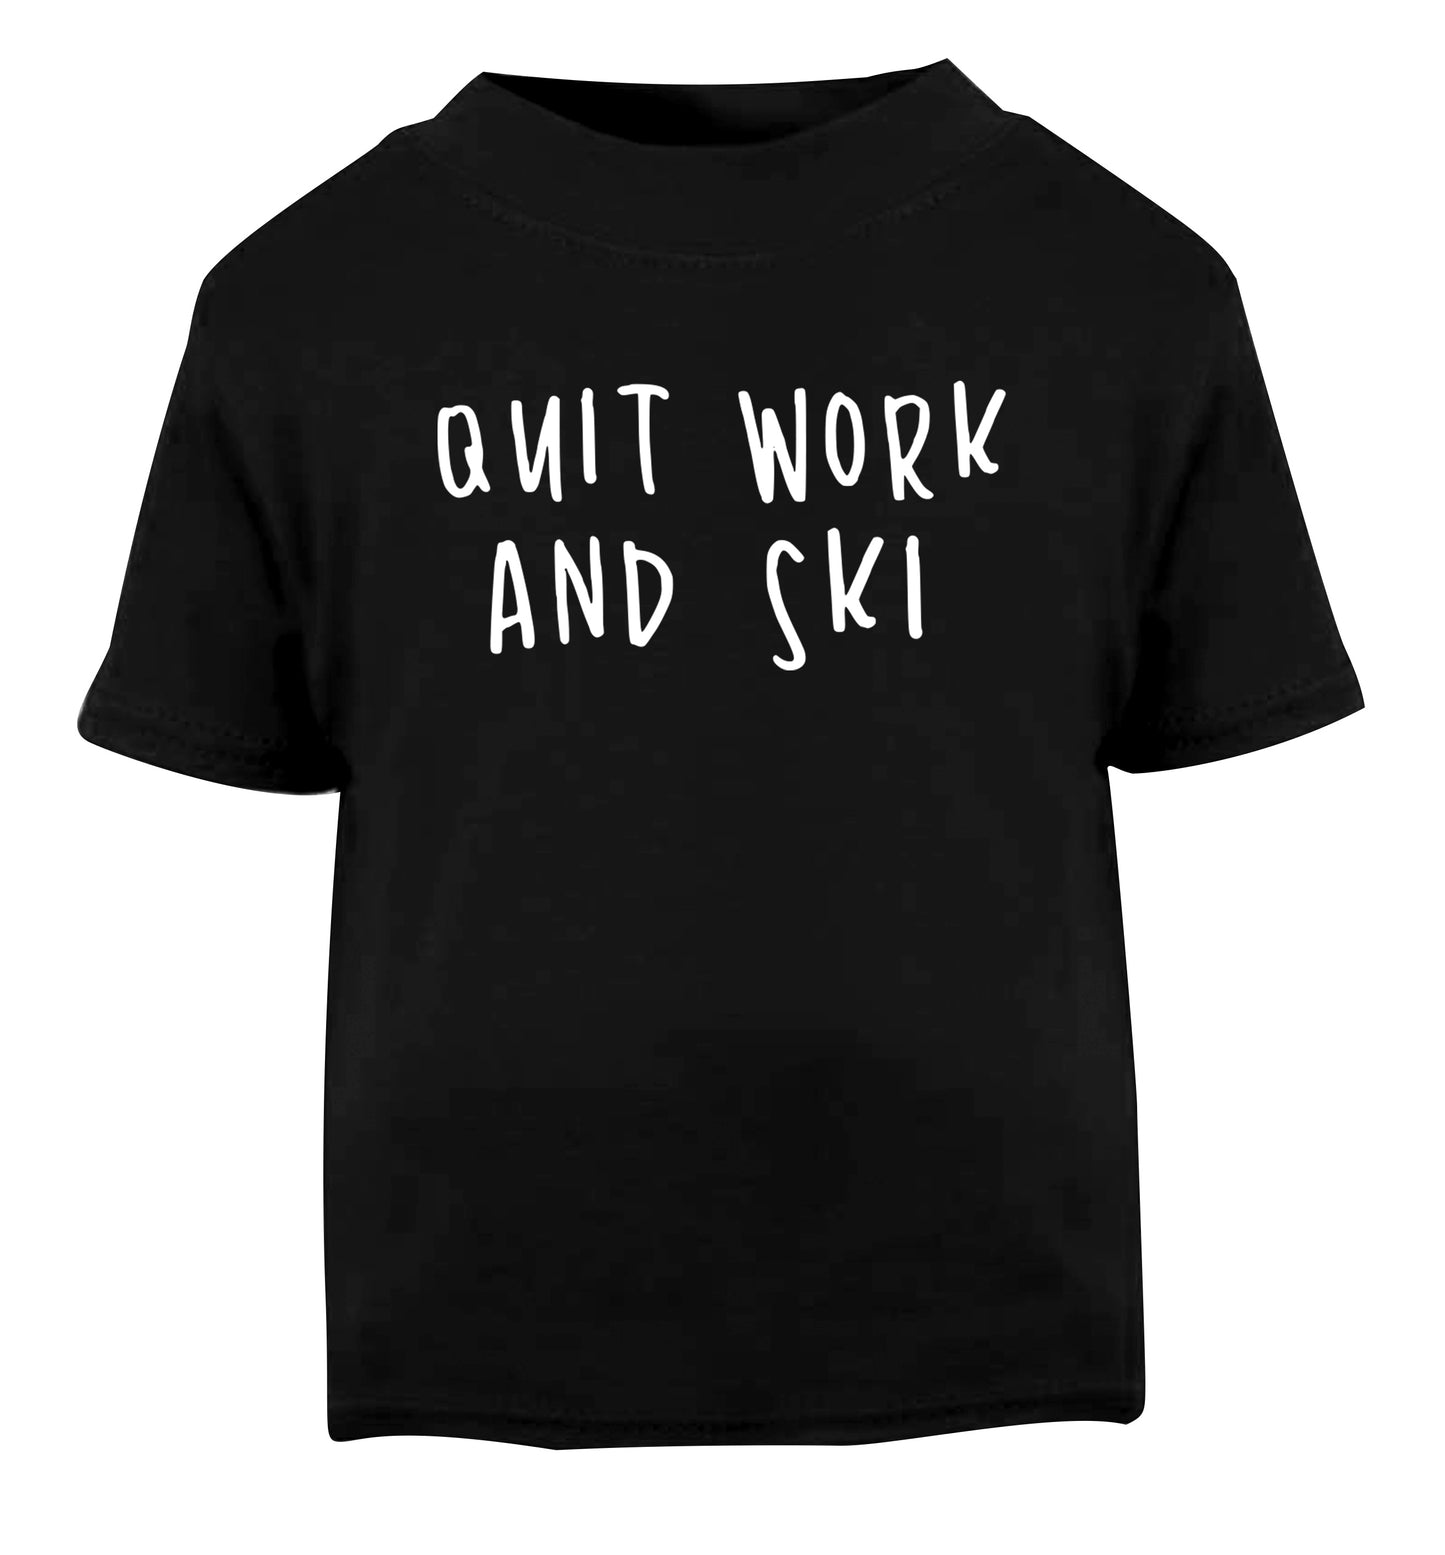 Quit work and ski Black Baby Toddler Tshirt 2 years